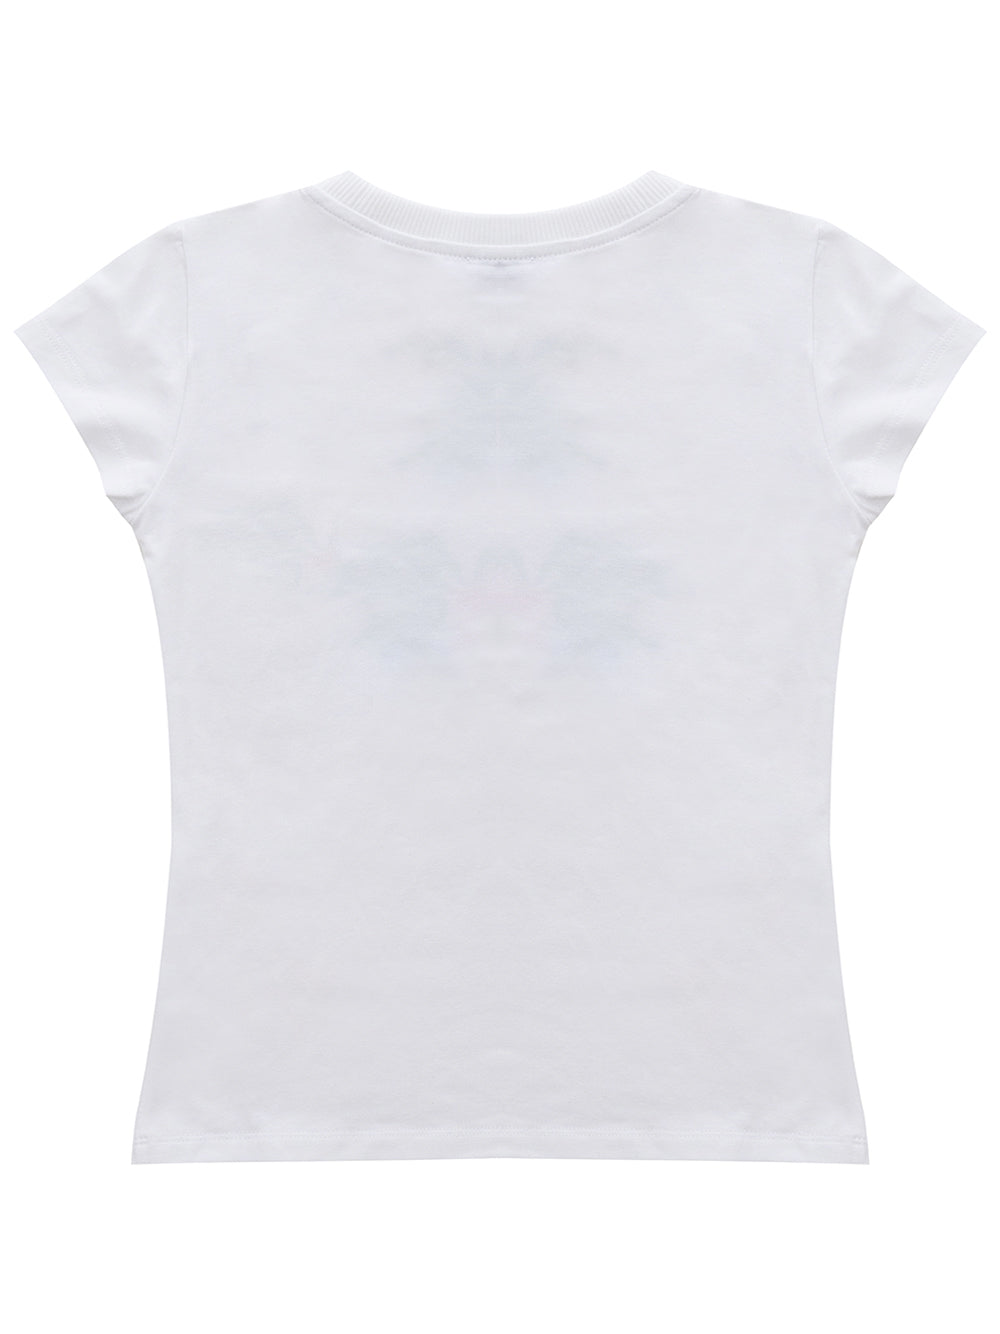 Moschino Flower Print Girl T-shirt